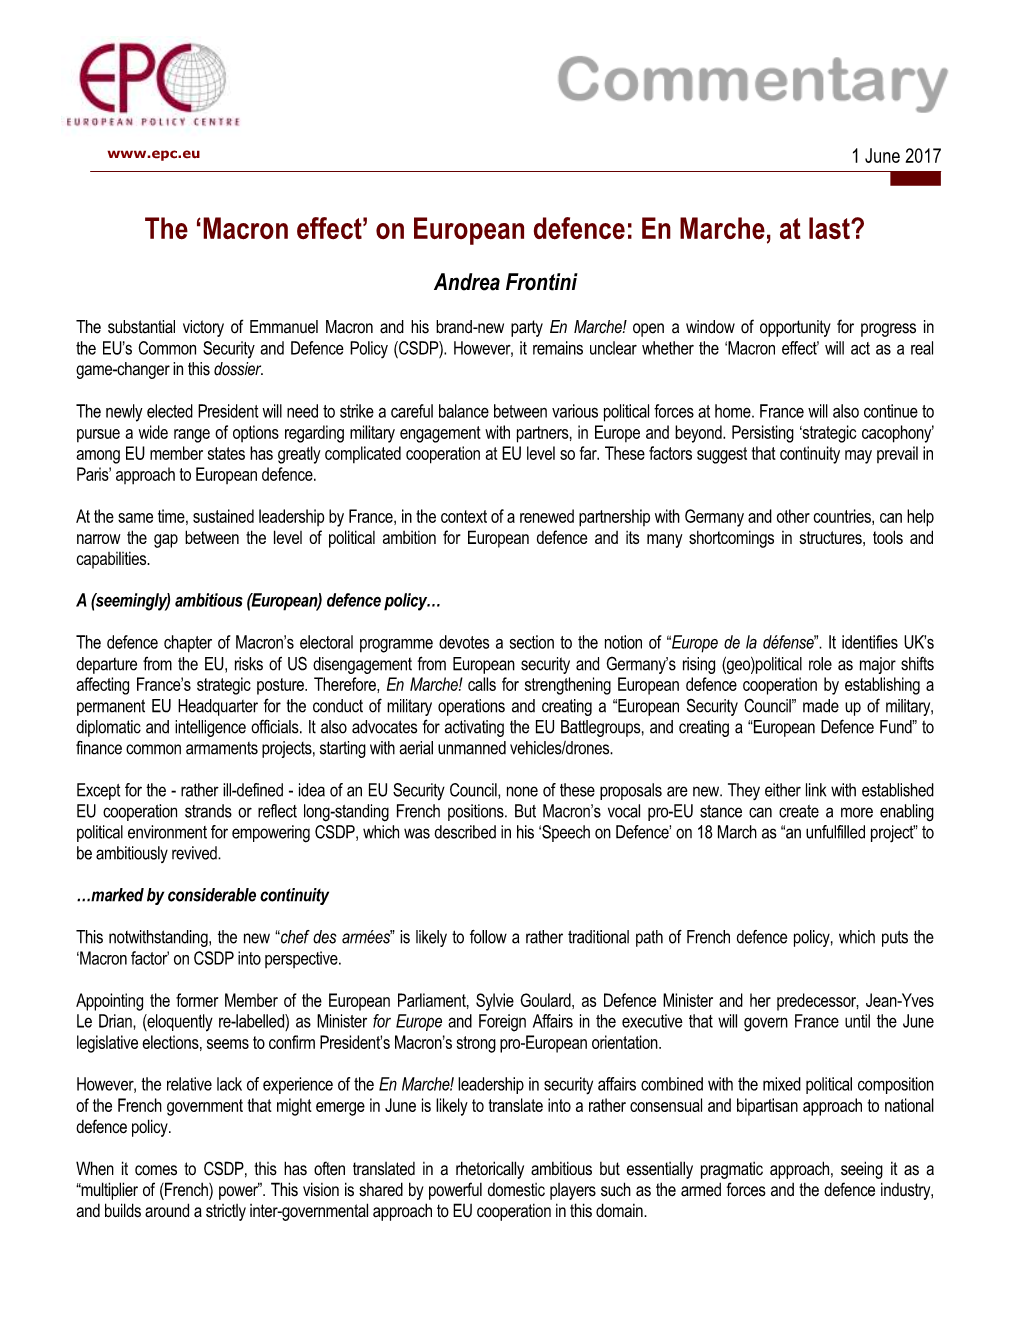 The 'Macron Effect' on European Defence: En Marche, at Last?